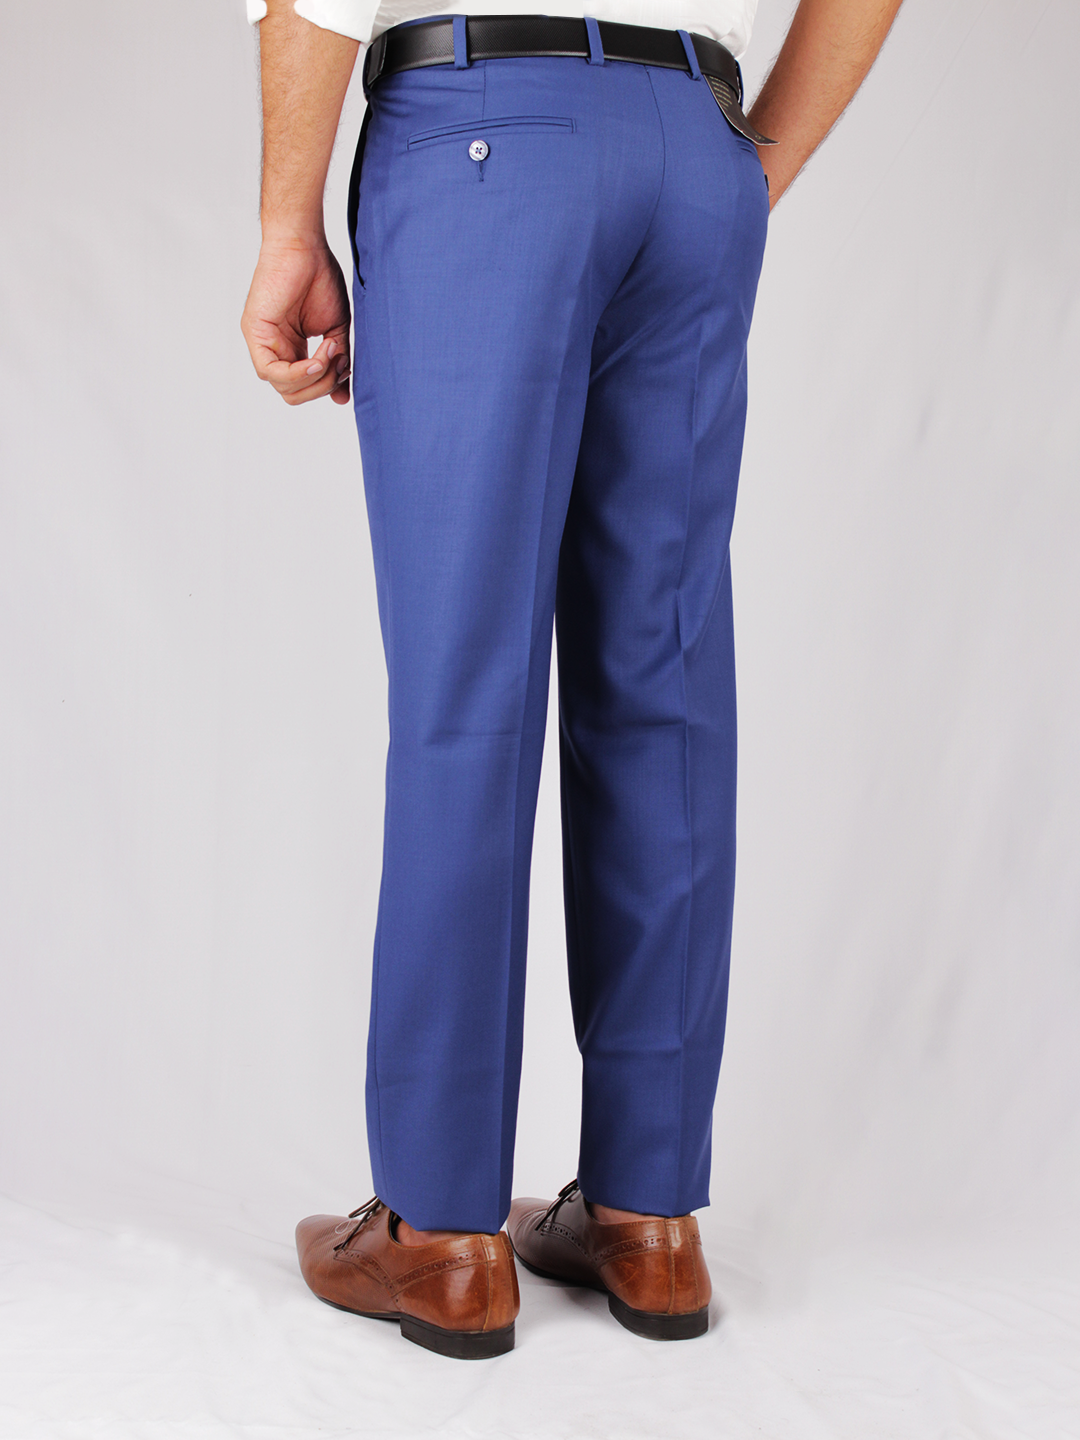 Classic Blue Formal Pants for Men - Touchline Tango – Touchline Tango